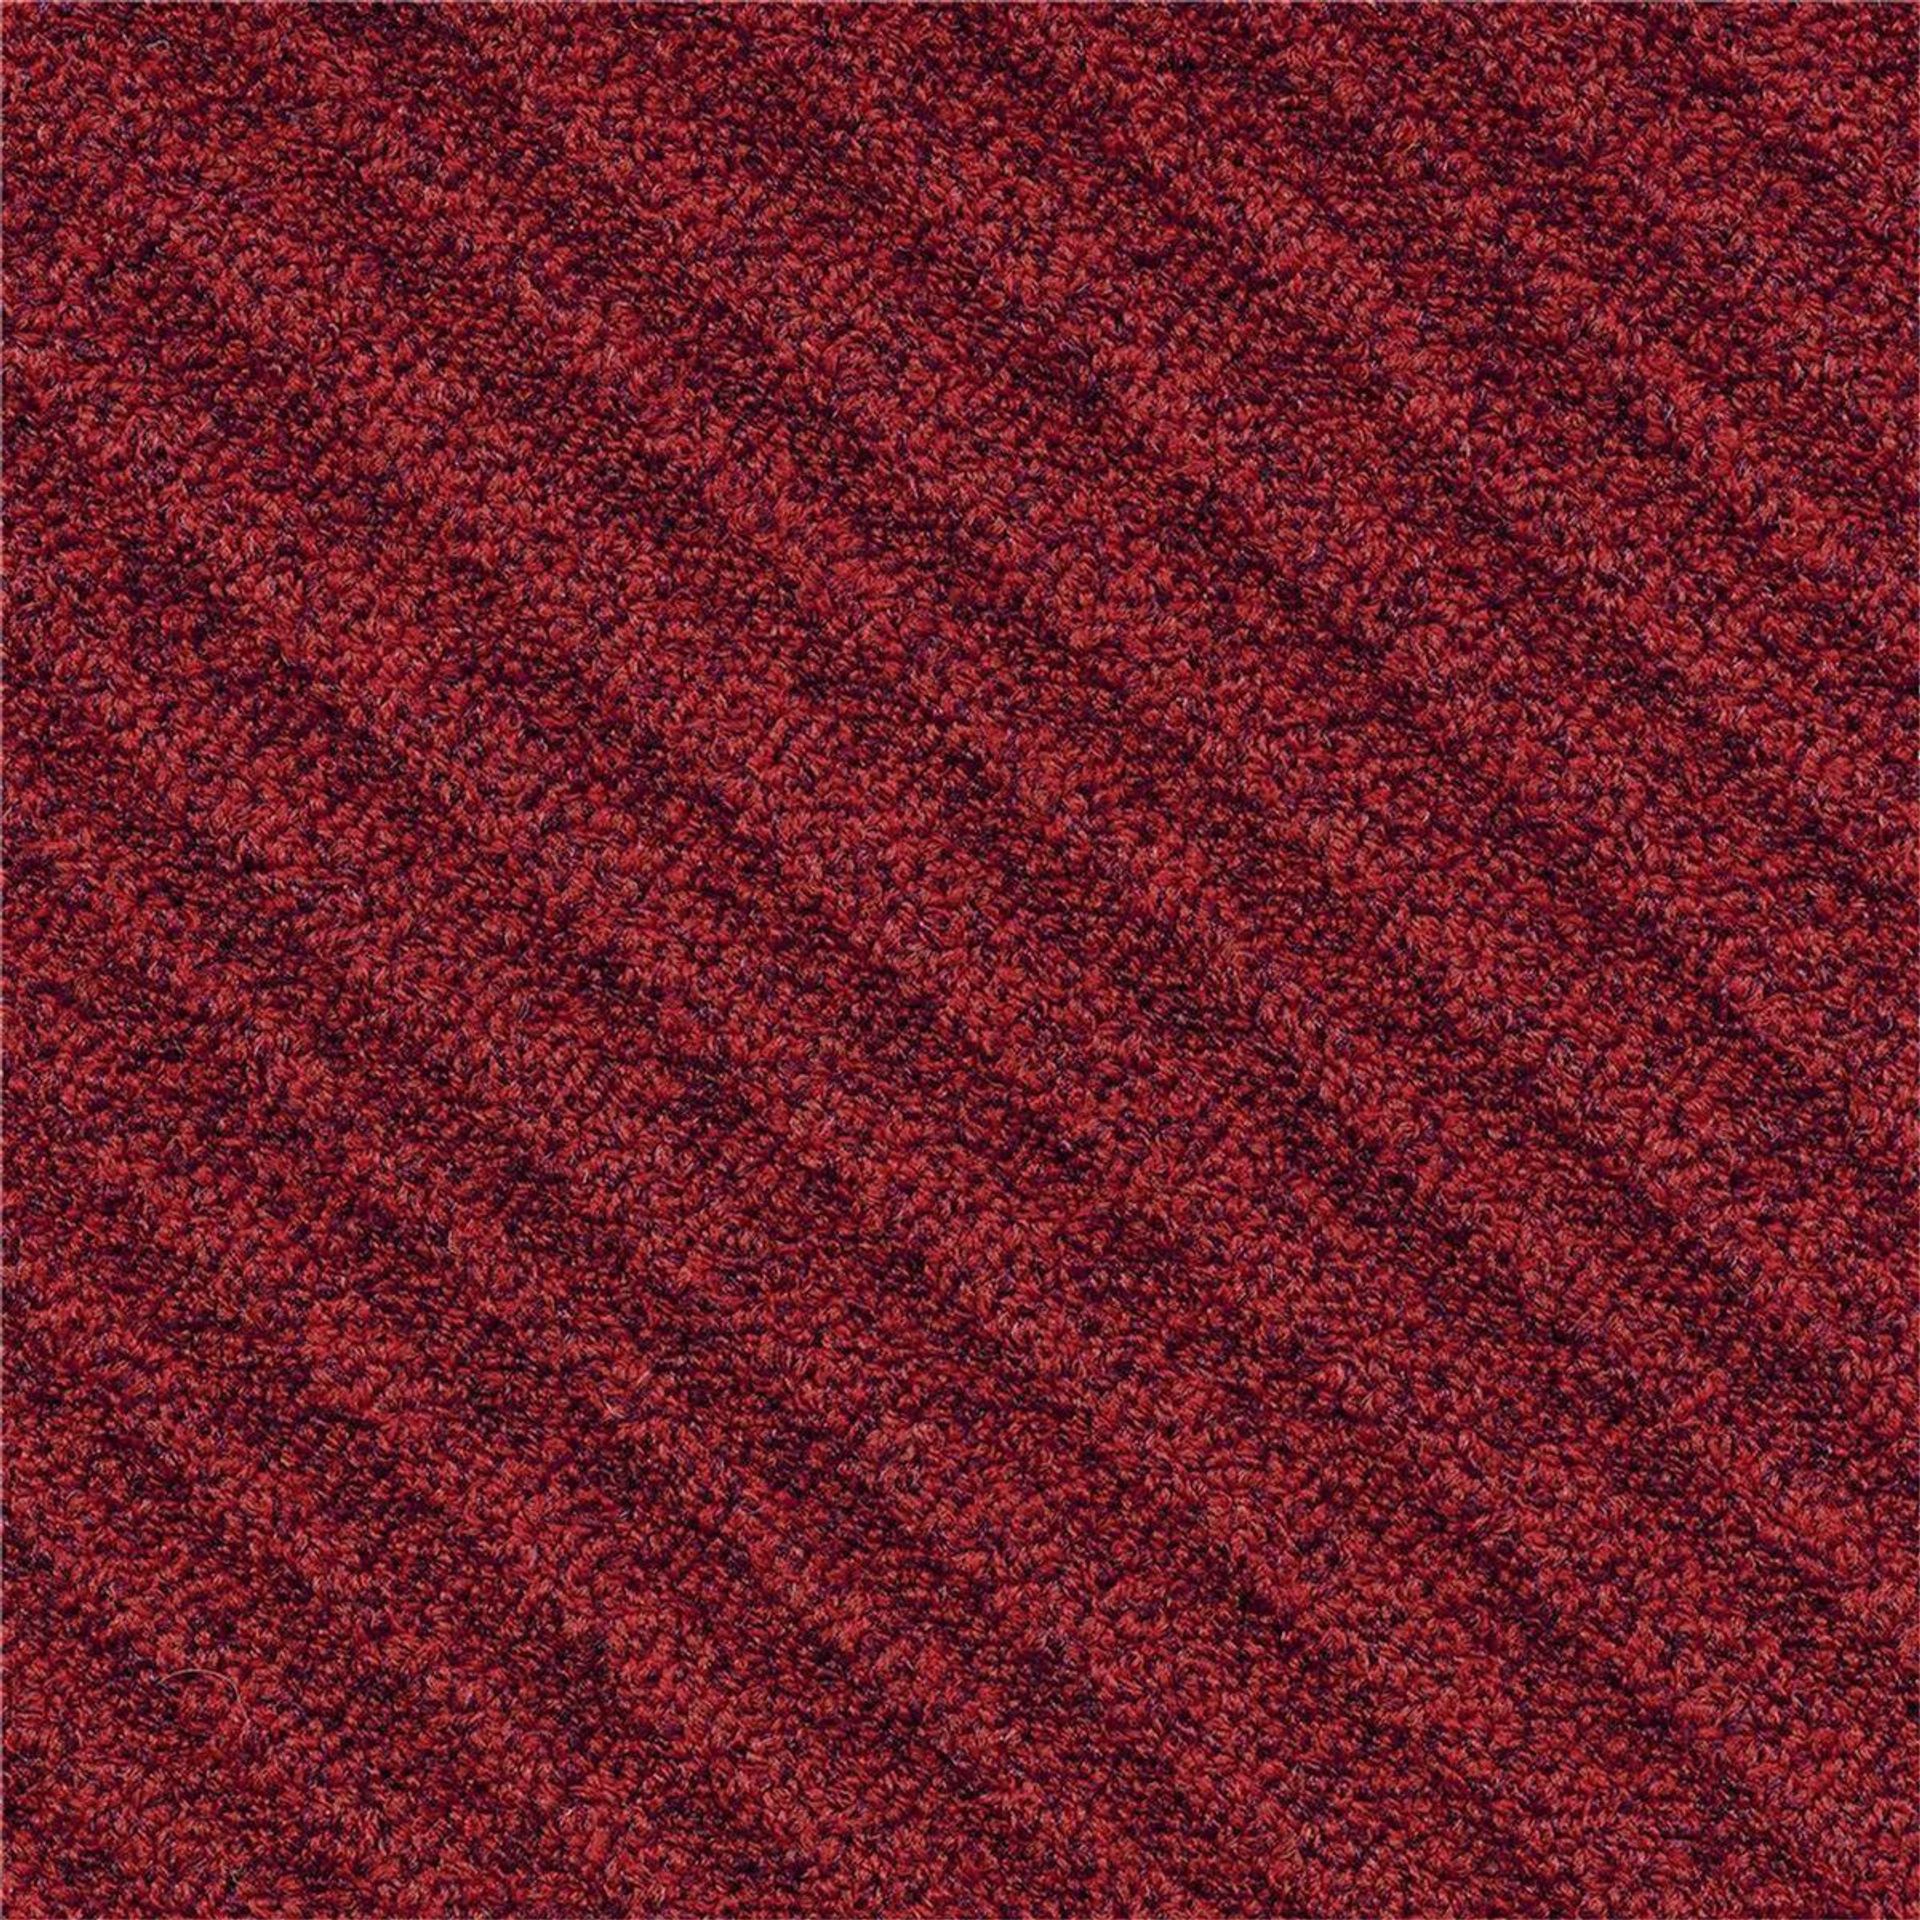 Teppichfliesen 25 x 100 cm Schlinge strukturiert Traverse B968 4207 Rot Linear